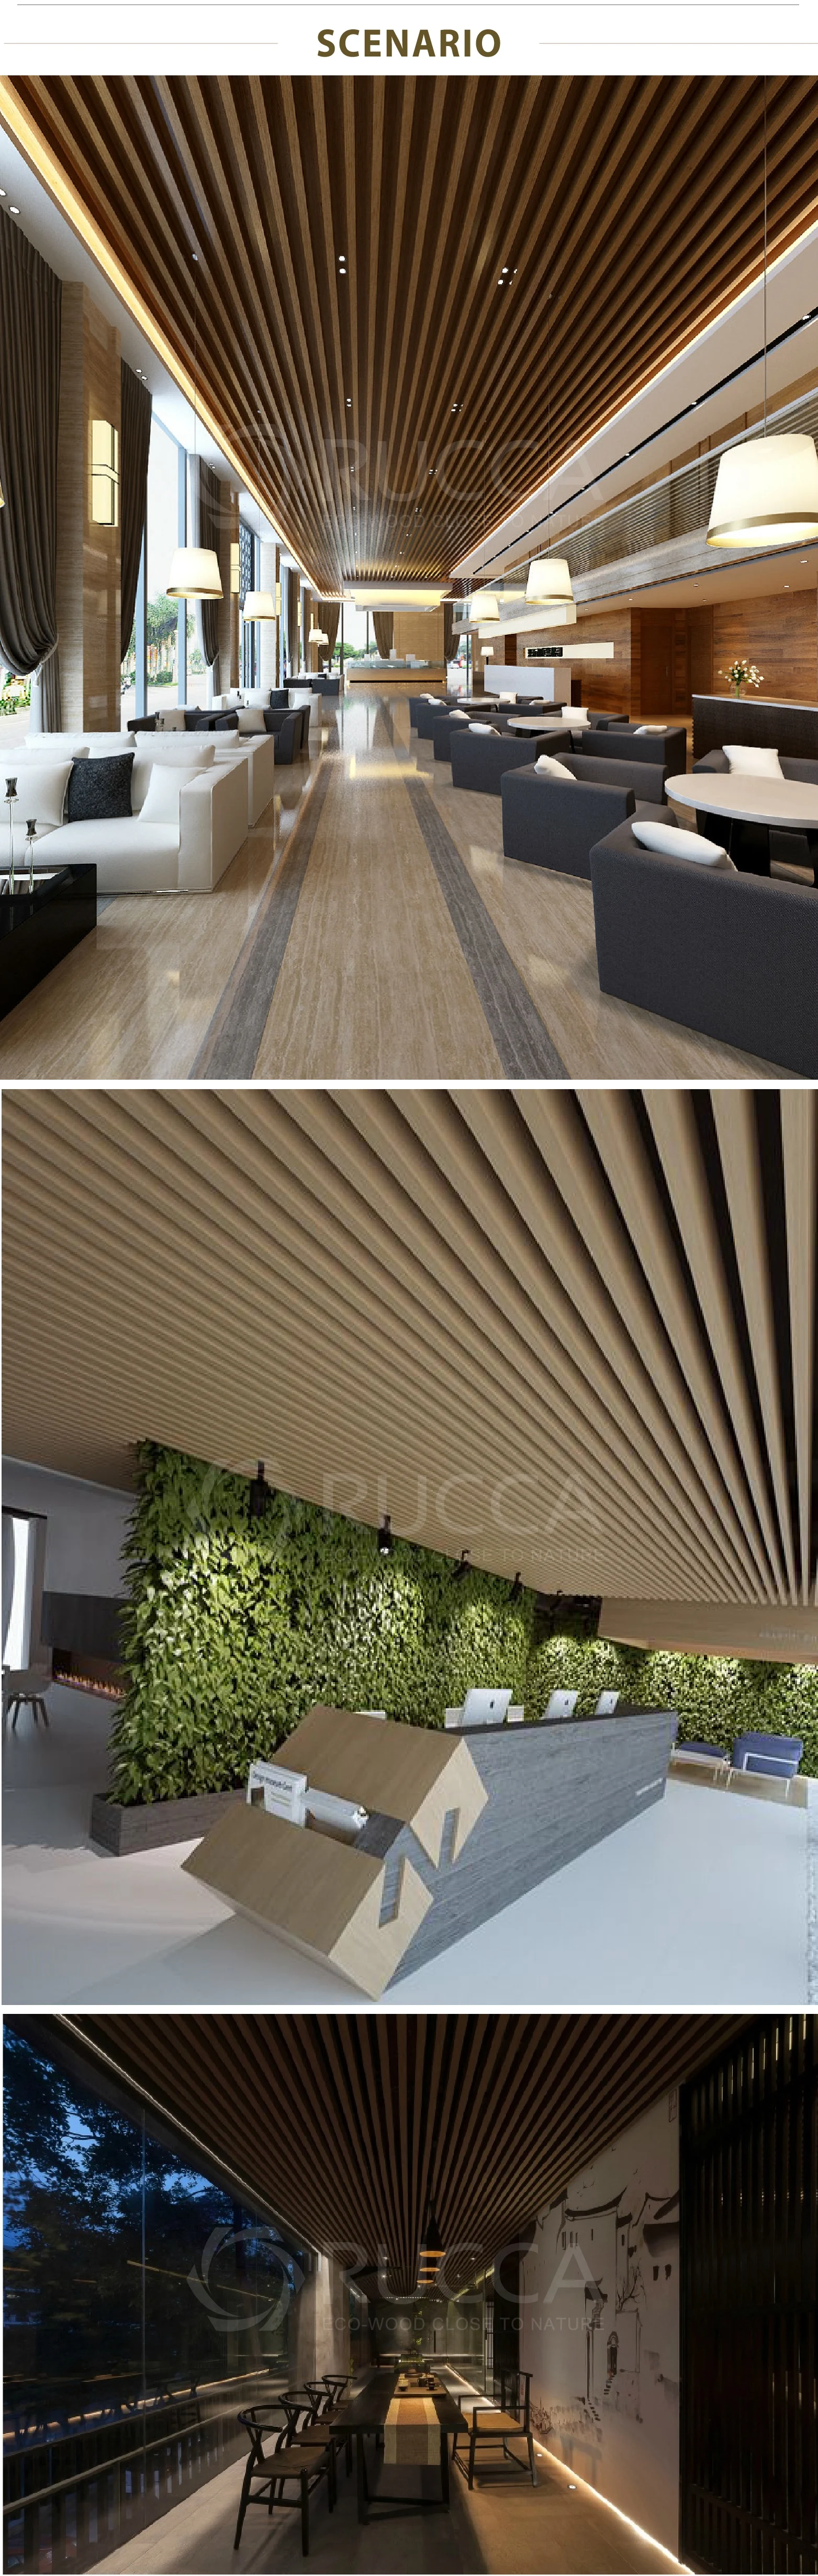 Rucca Wpc Outdoor Faux Wood Ceiling Panel False Design Decorative